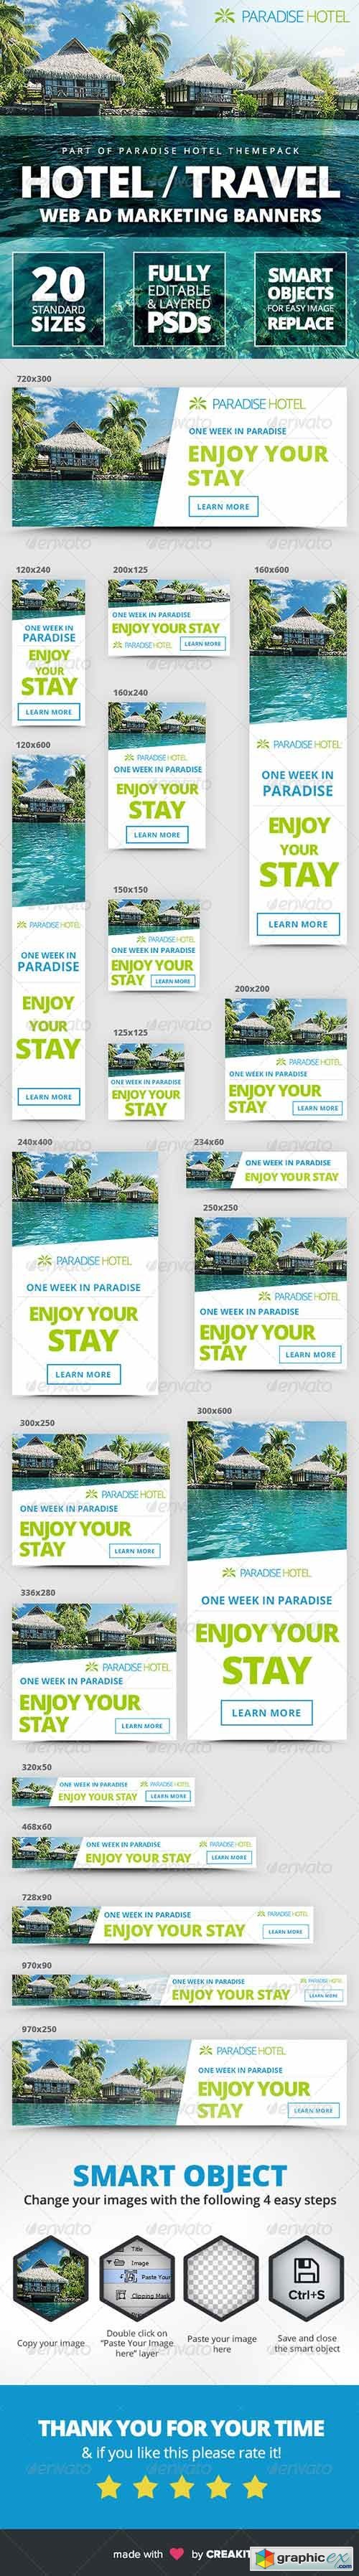 Hotel - Travel Web Ad Marketing Banners